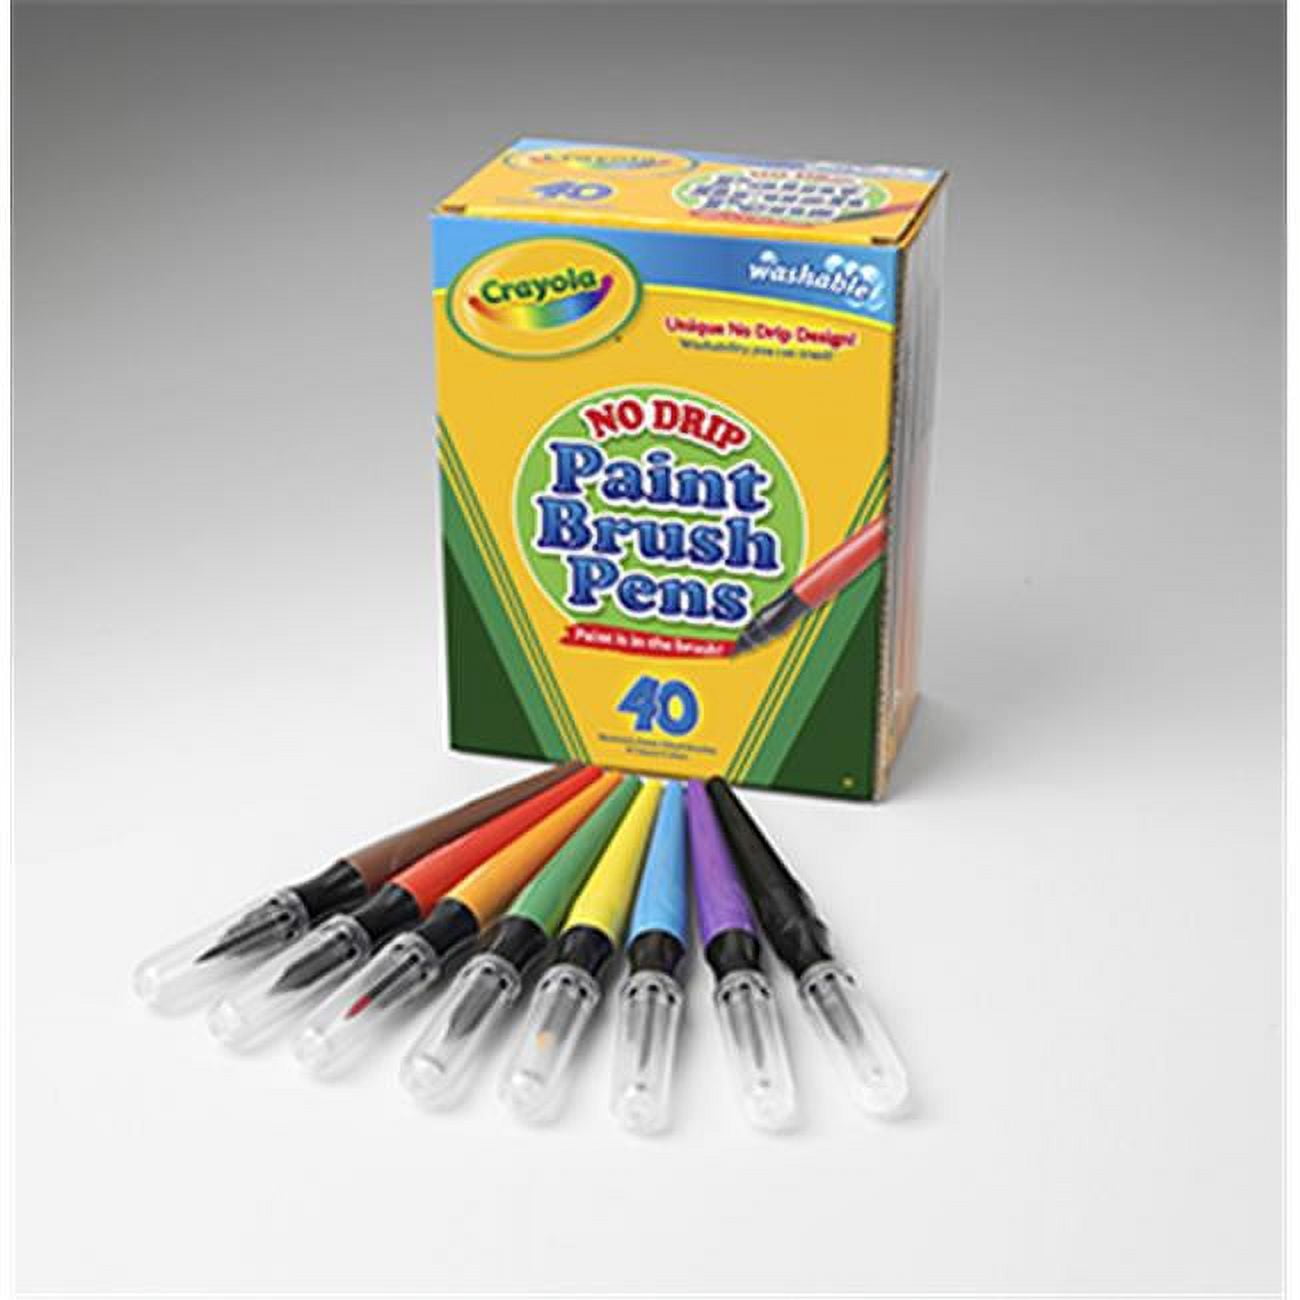 Crayola Paint Brush Pen Set, 5-Colors - Walmart.com